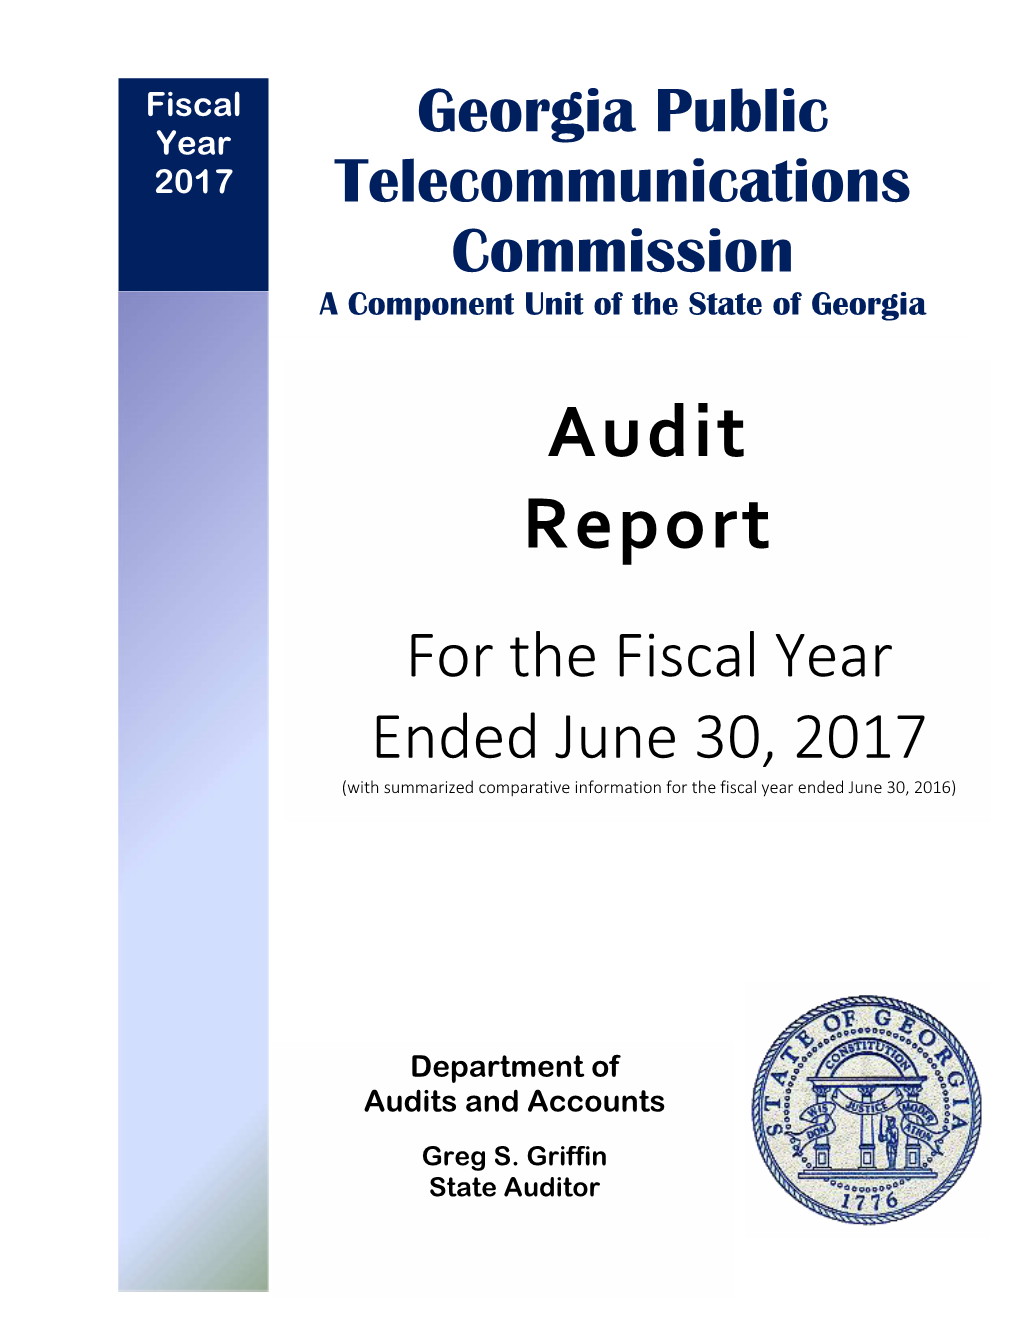 Georgia Public Telecommunications Commission Fiscal Year 2017 Audit